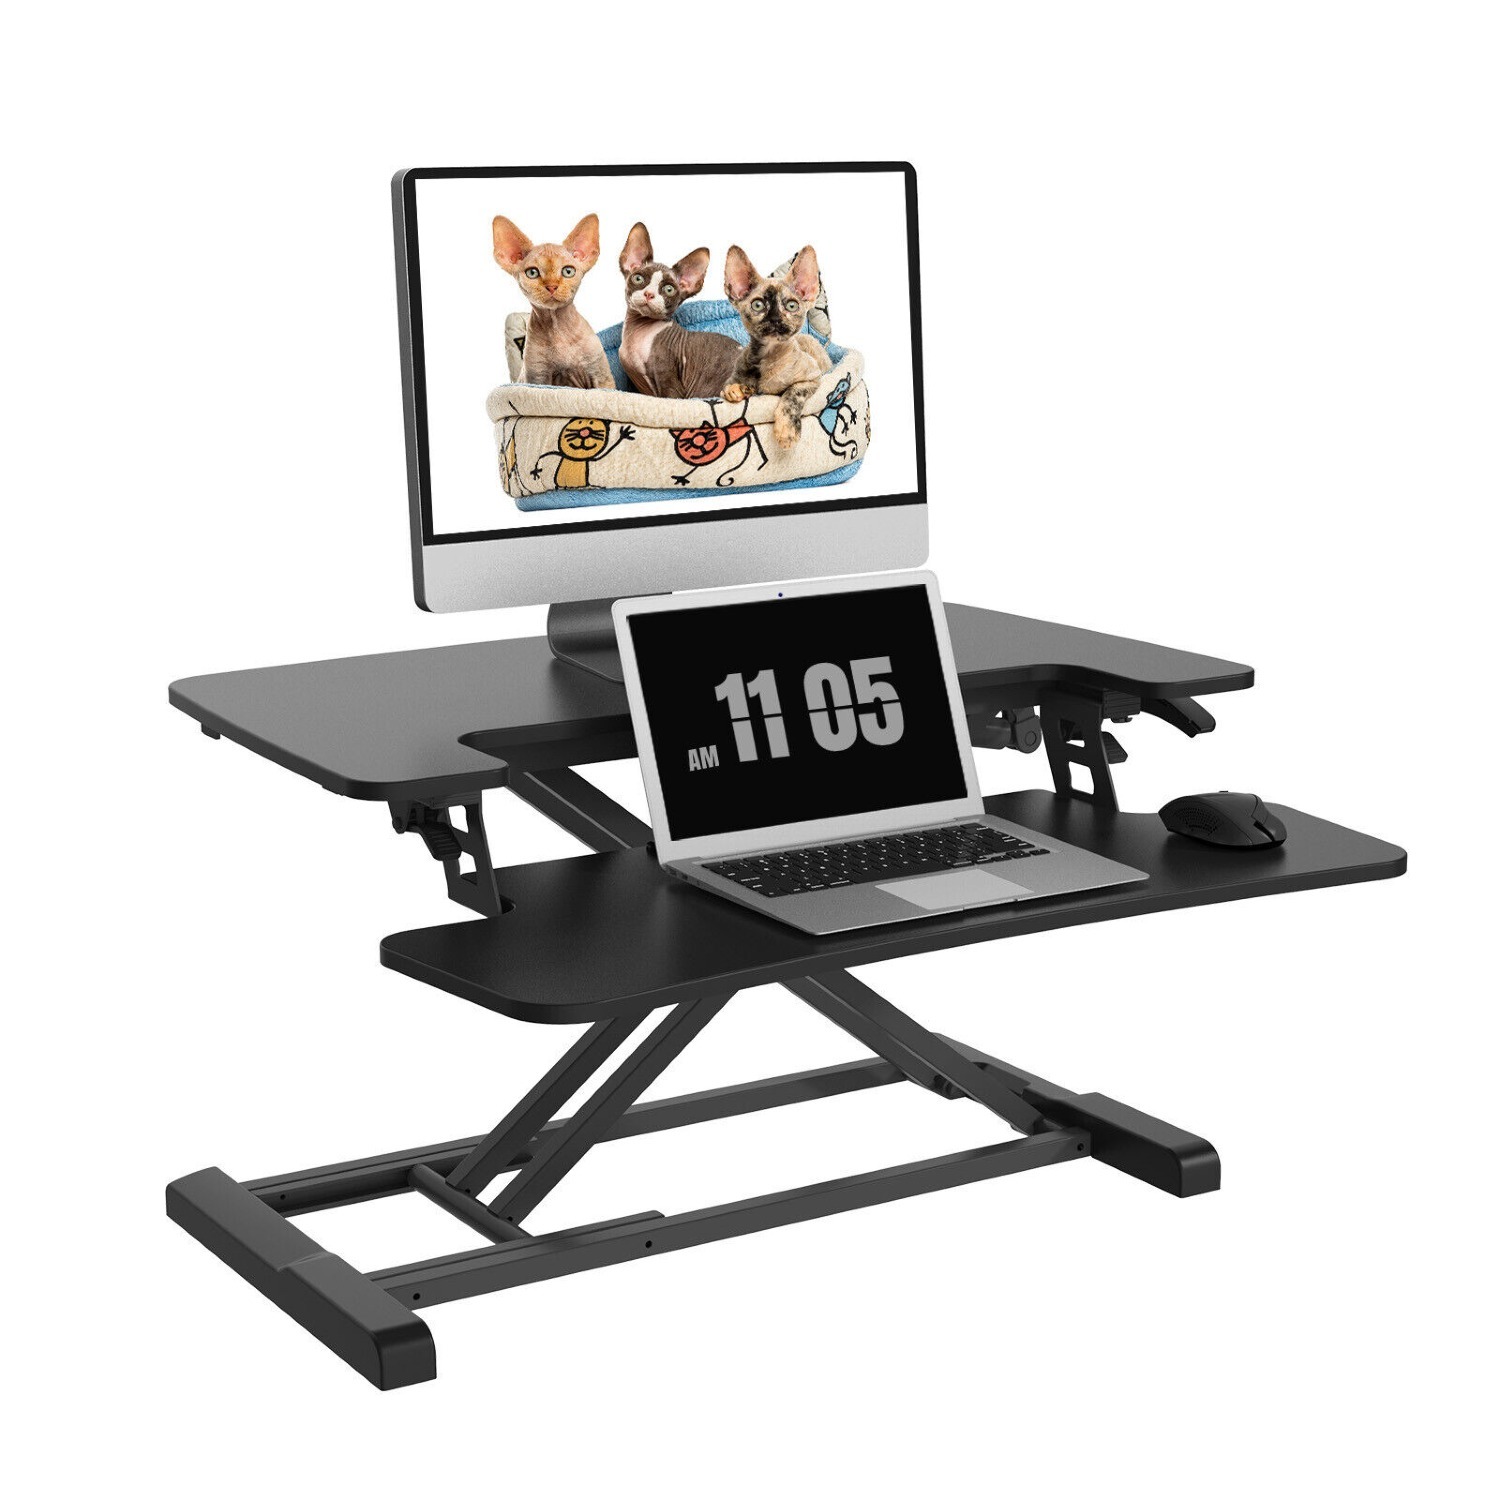 28" Flexispot Adjustable Standing Desk Converter $60 + Free Shipping